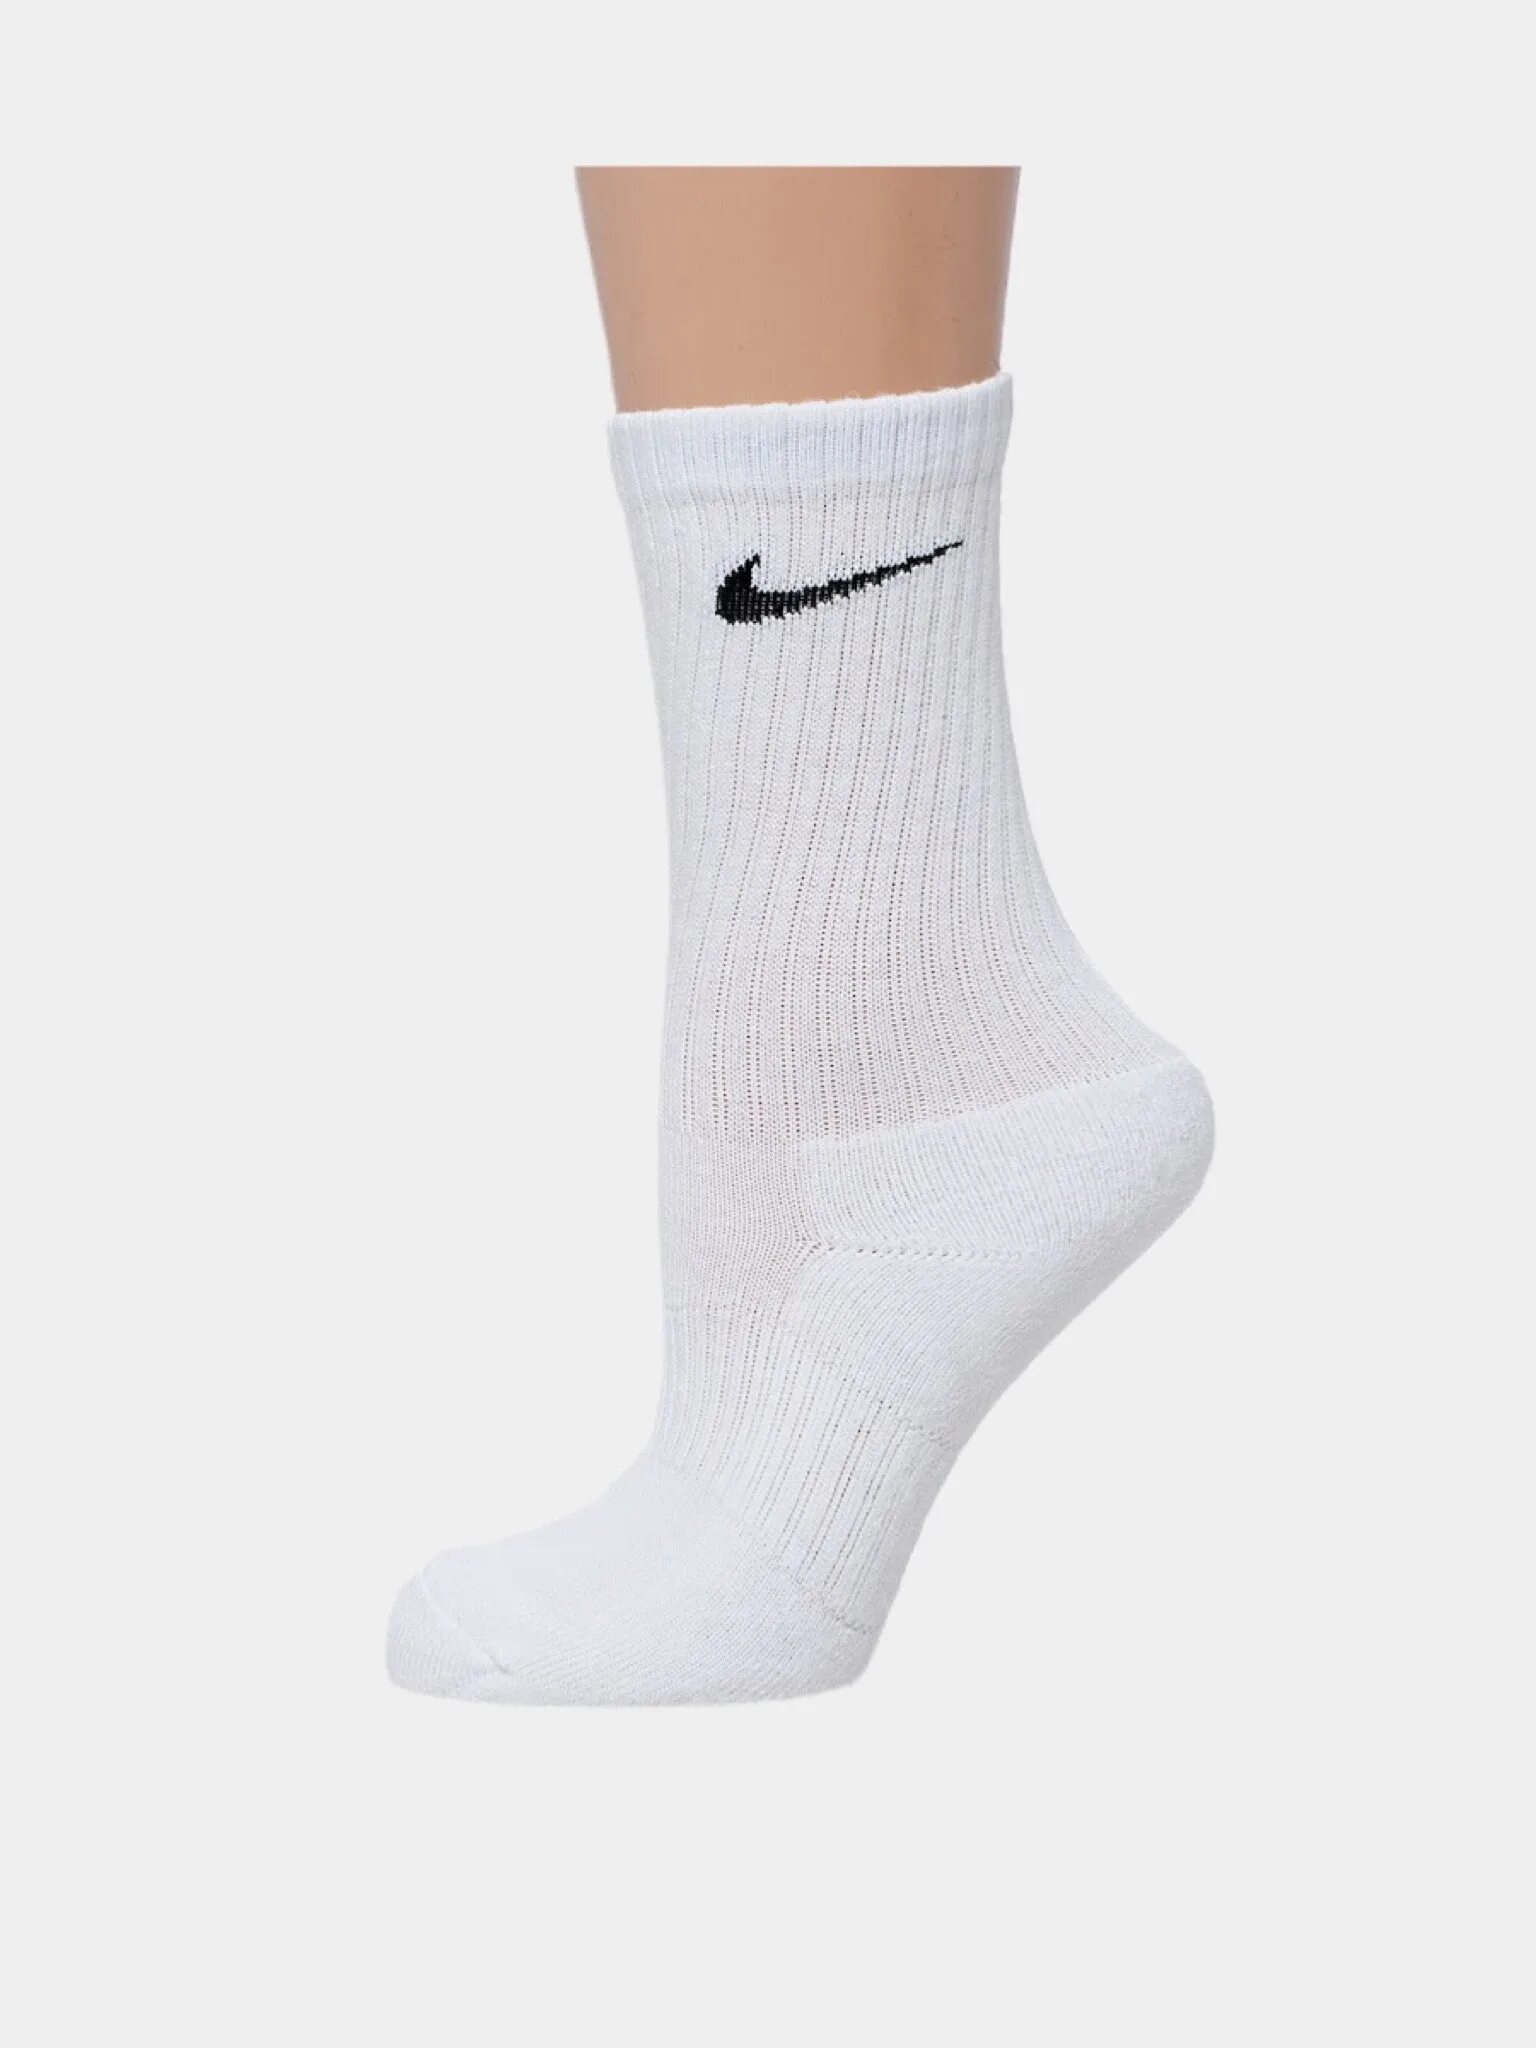 Наски личный. Носки найк высокие. Носки найк мужские. Носки найк белые высокие. Носки Nike белые.